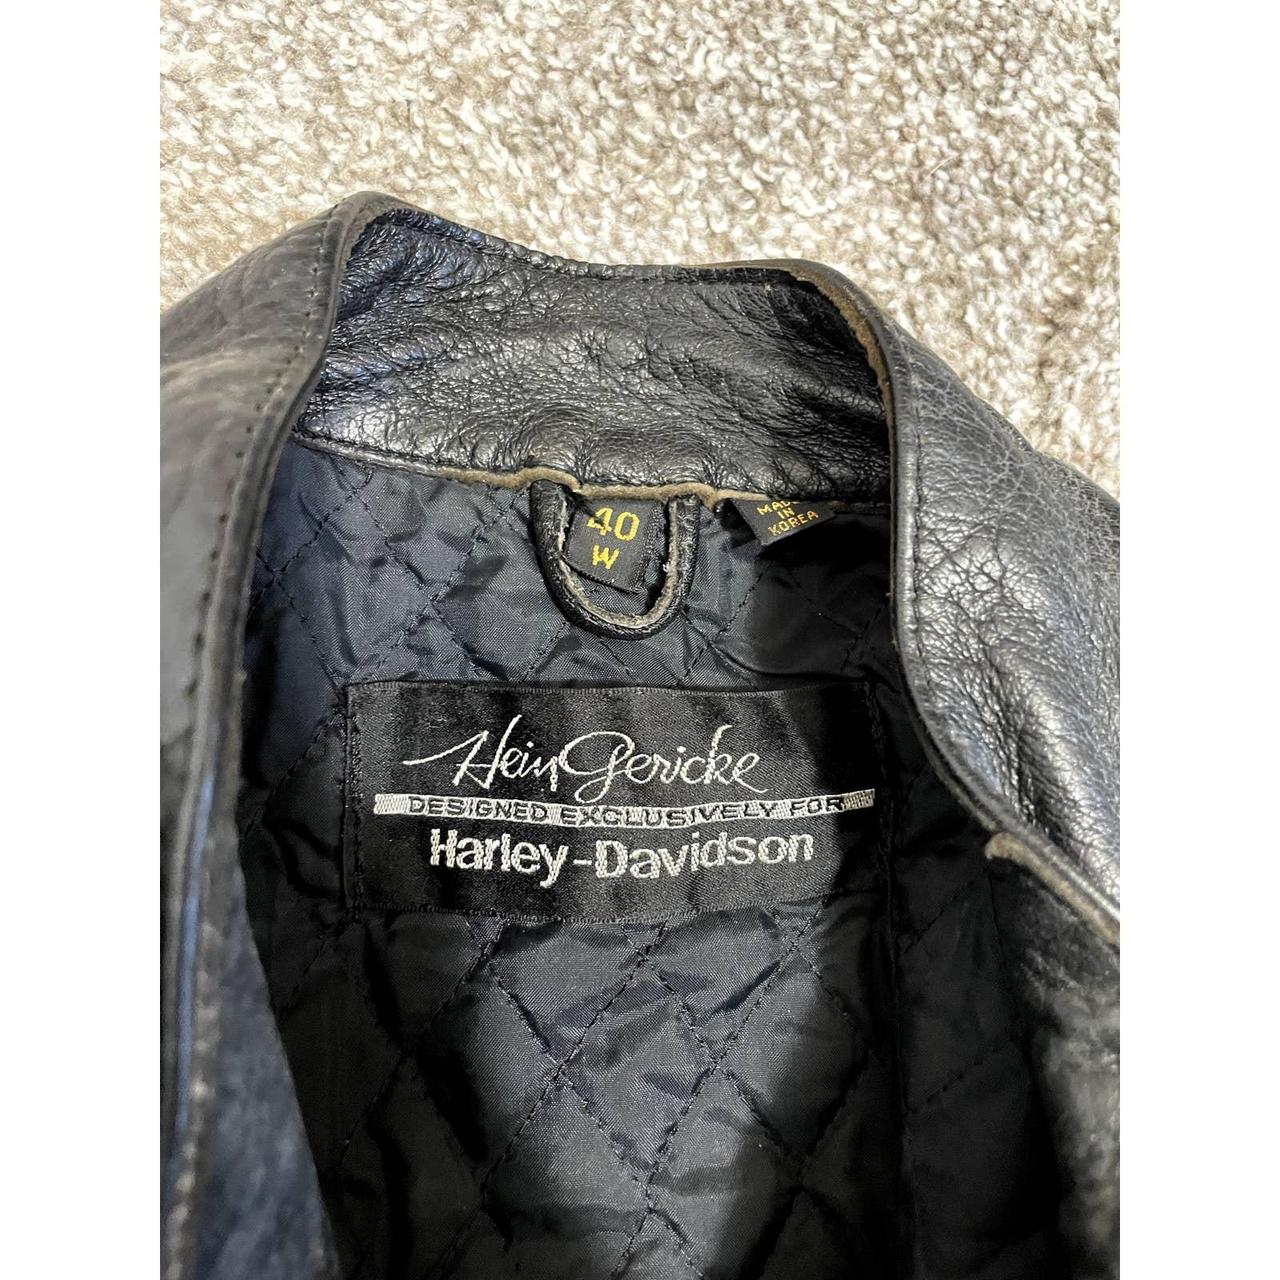 Hein Gericke Harley Davidson leather pants - Depop